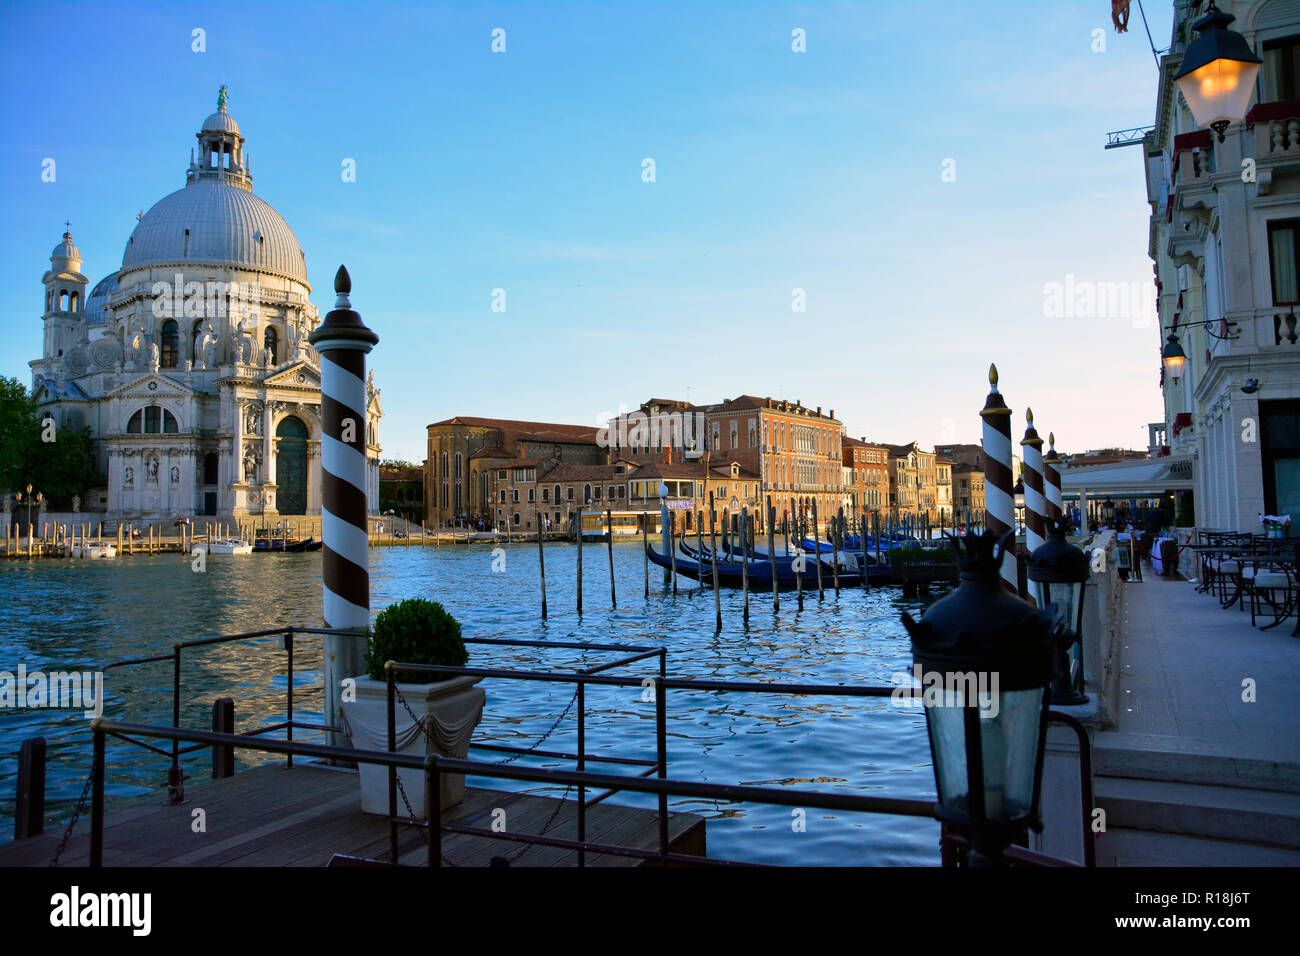 Venice Canal Grande view, overlooking Basilica Santa Maria della Salute, including Gondoles. Stock Photo